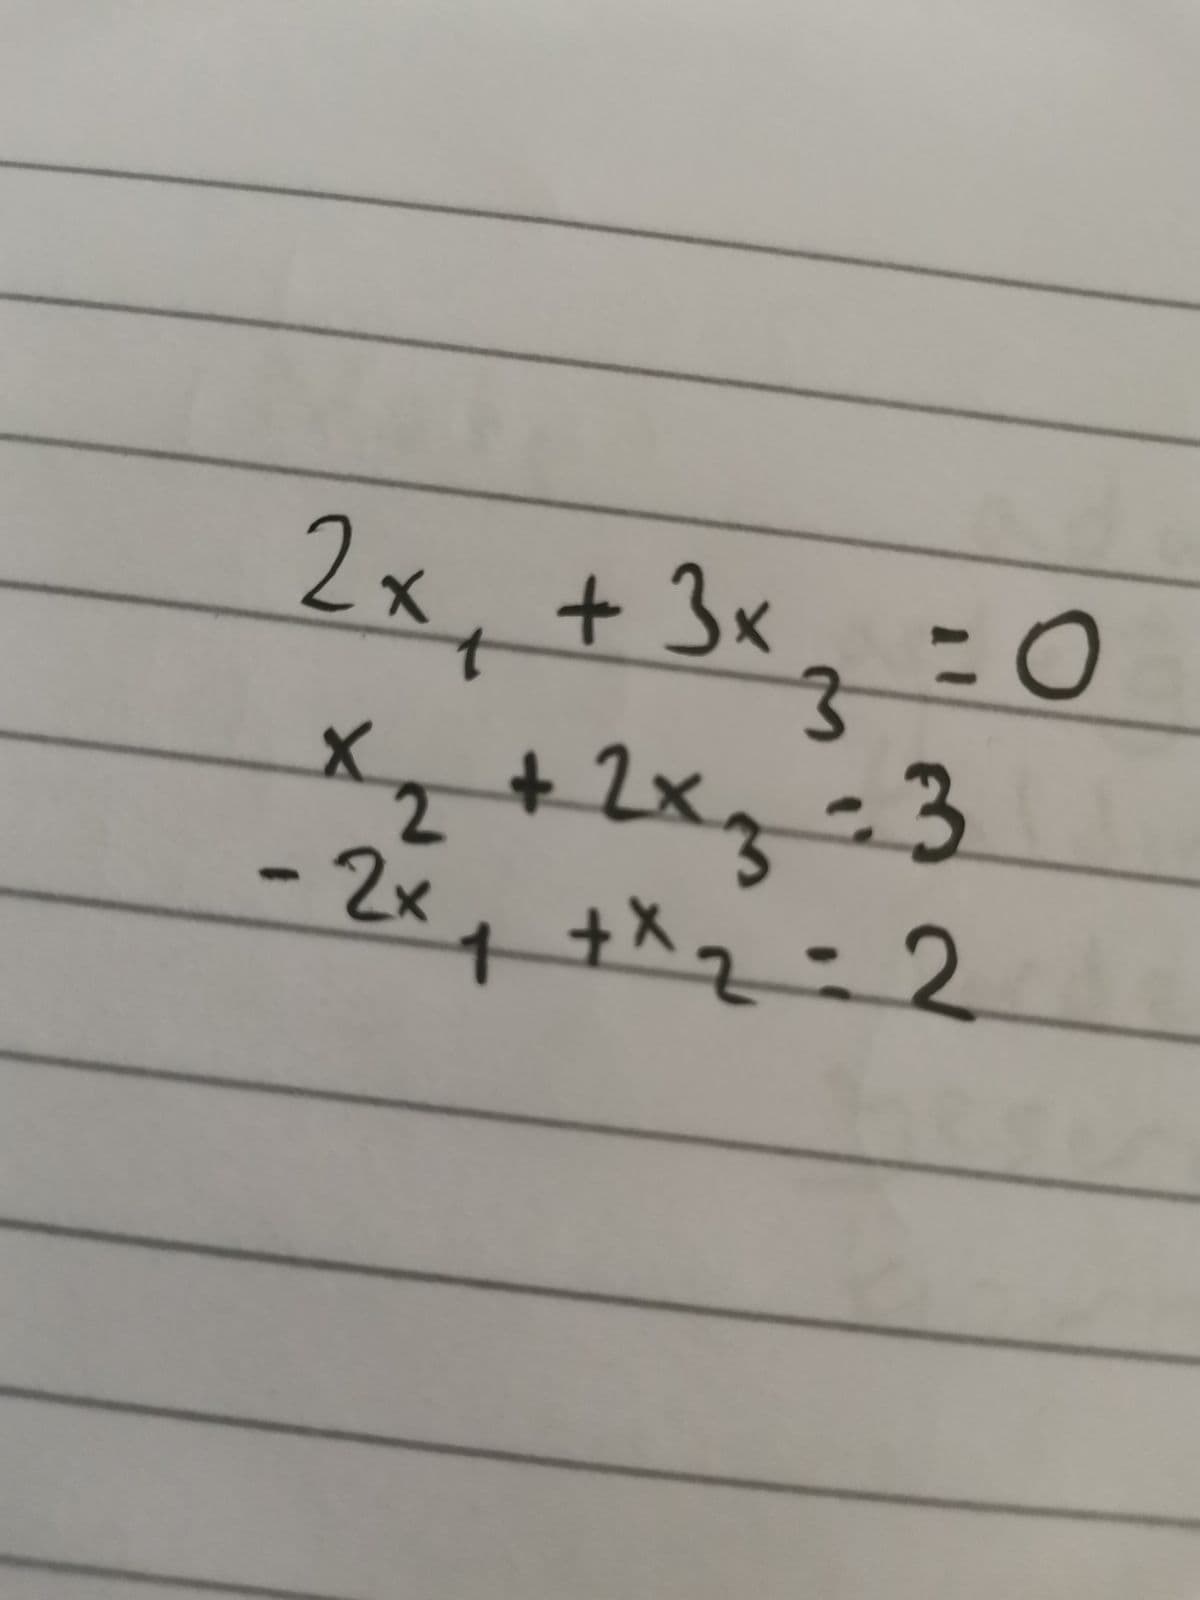 2x + 3x₂ = 0
t
2
x₂ + 2x₂ =3
- 2х1 +*2=2